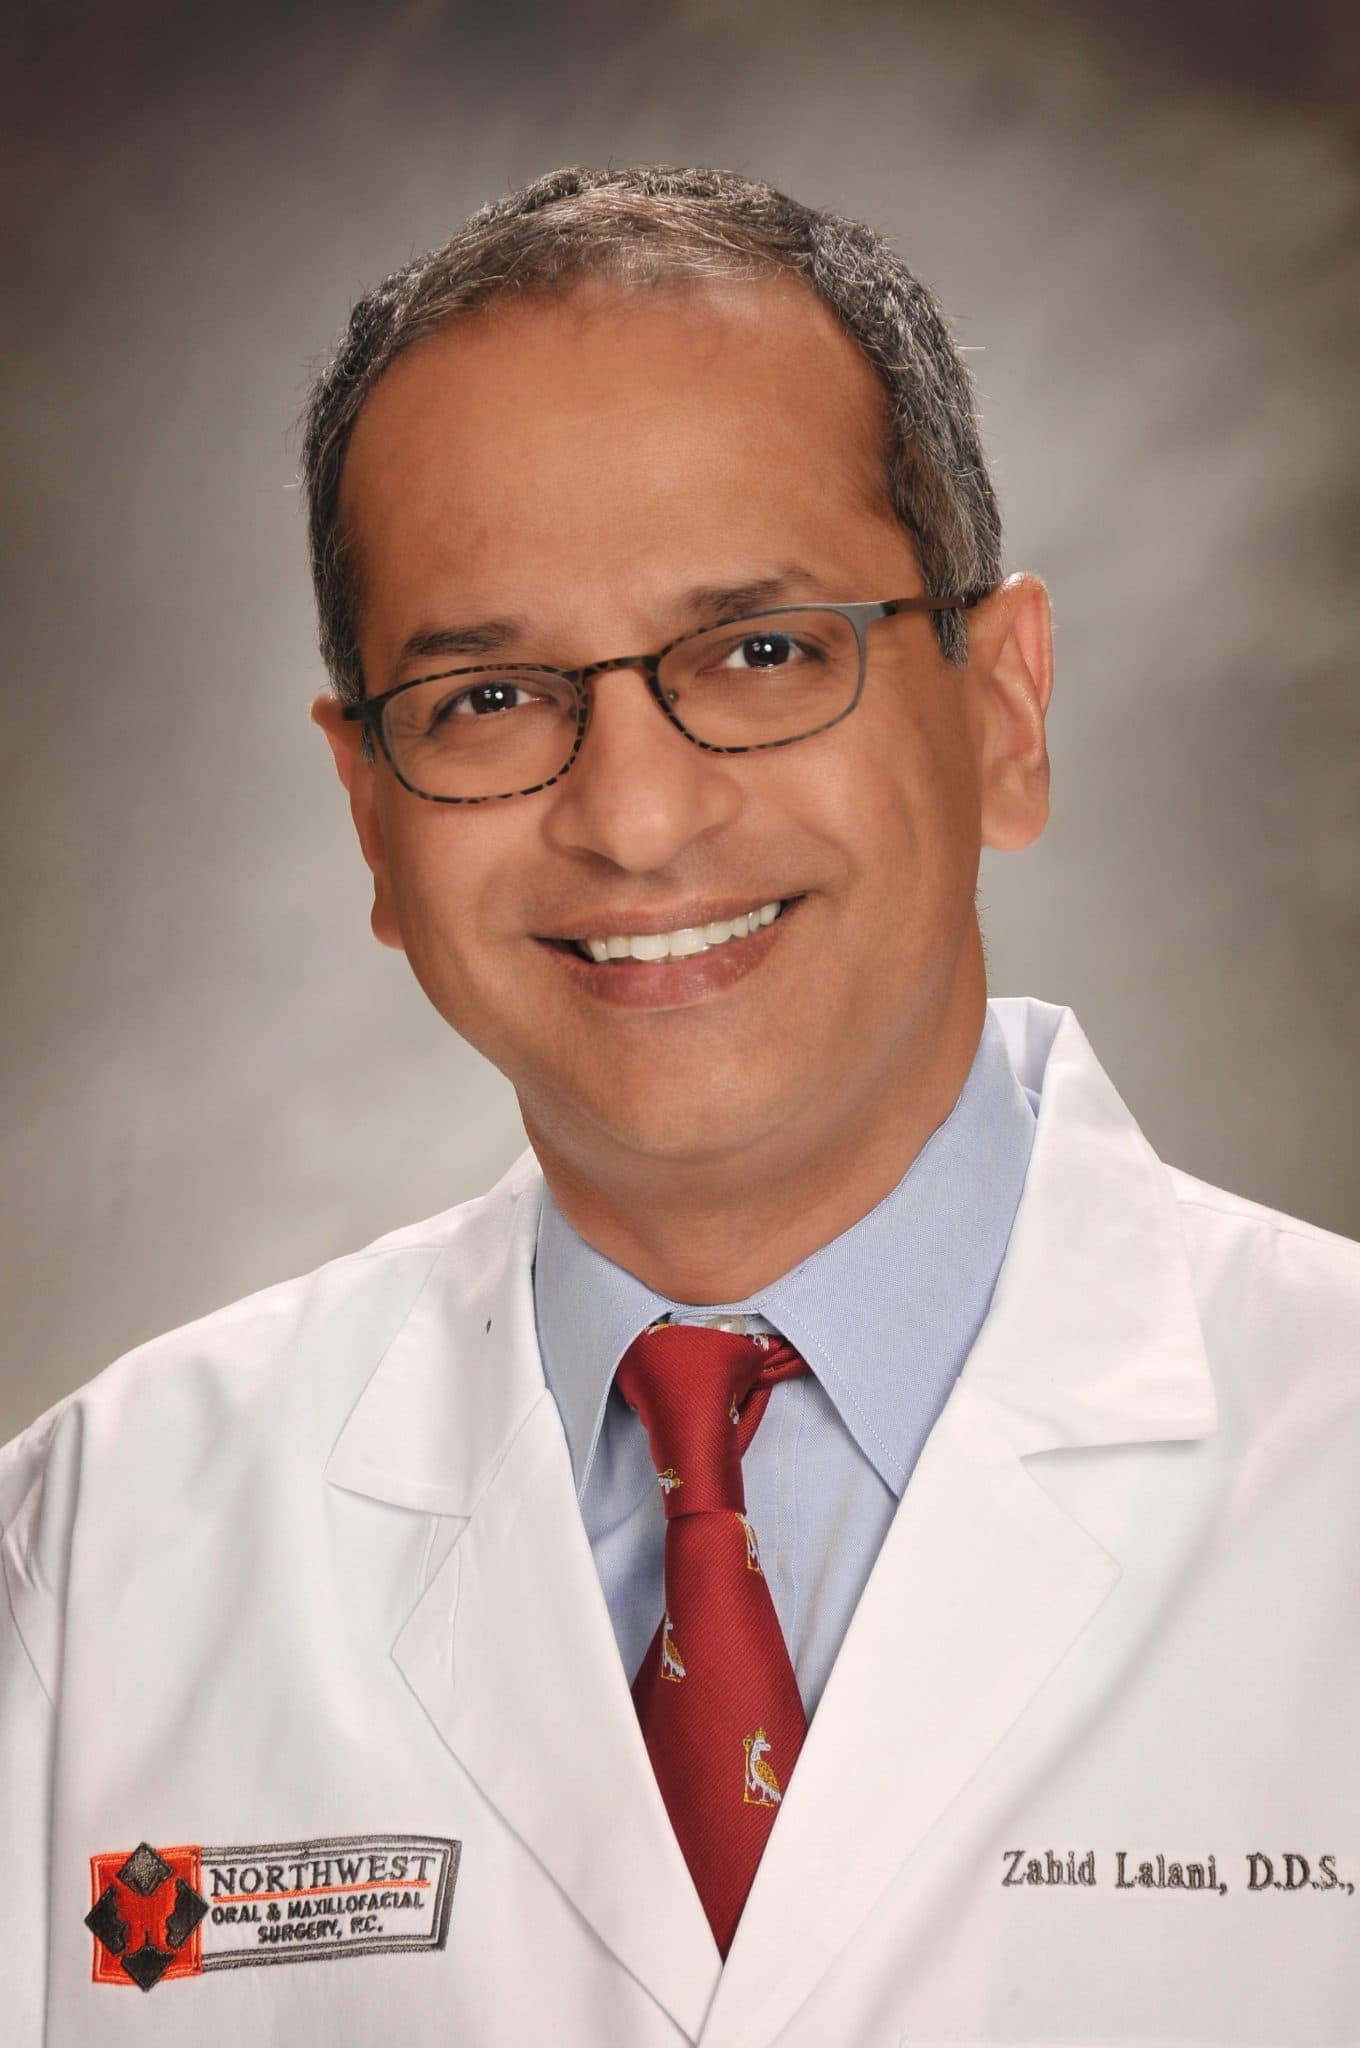 Dr Zahid Lalani - Northwest Oral & Maxillofacial Surgery